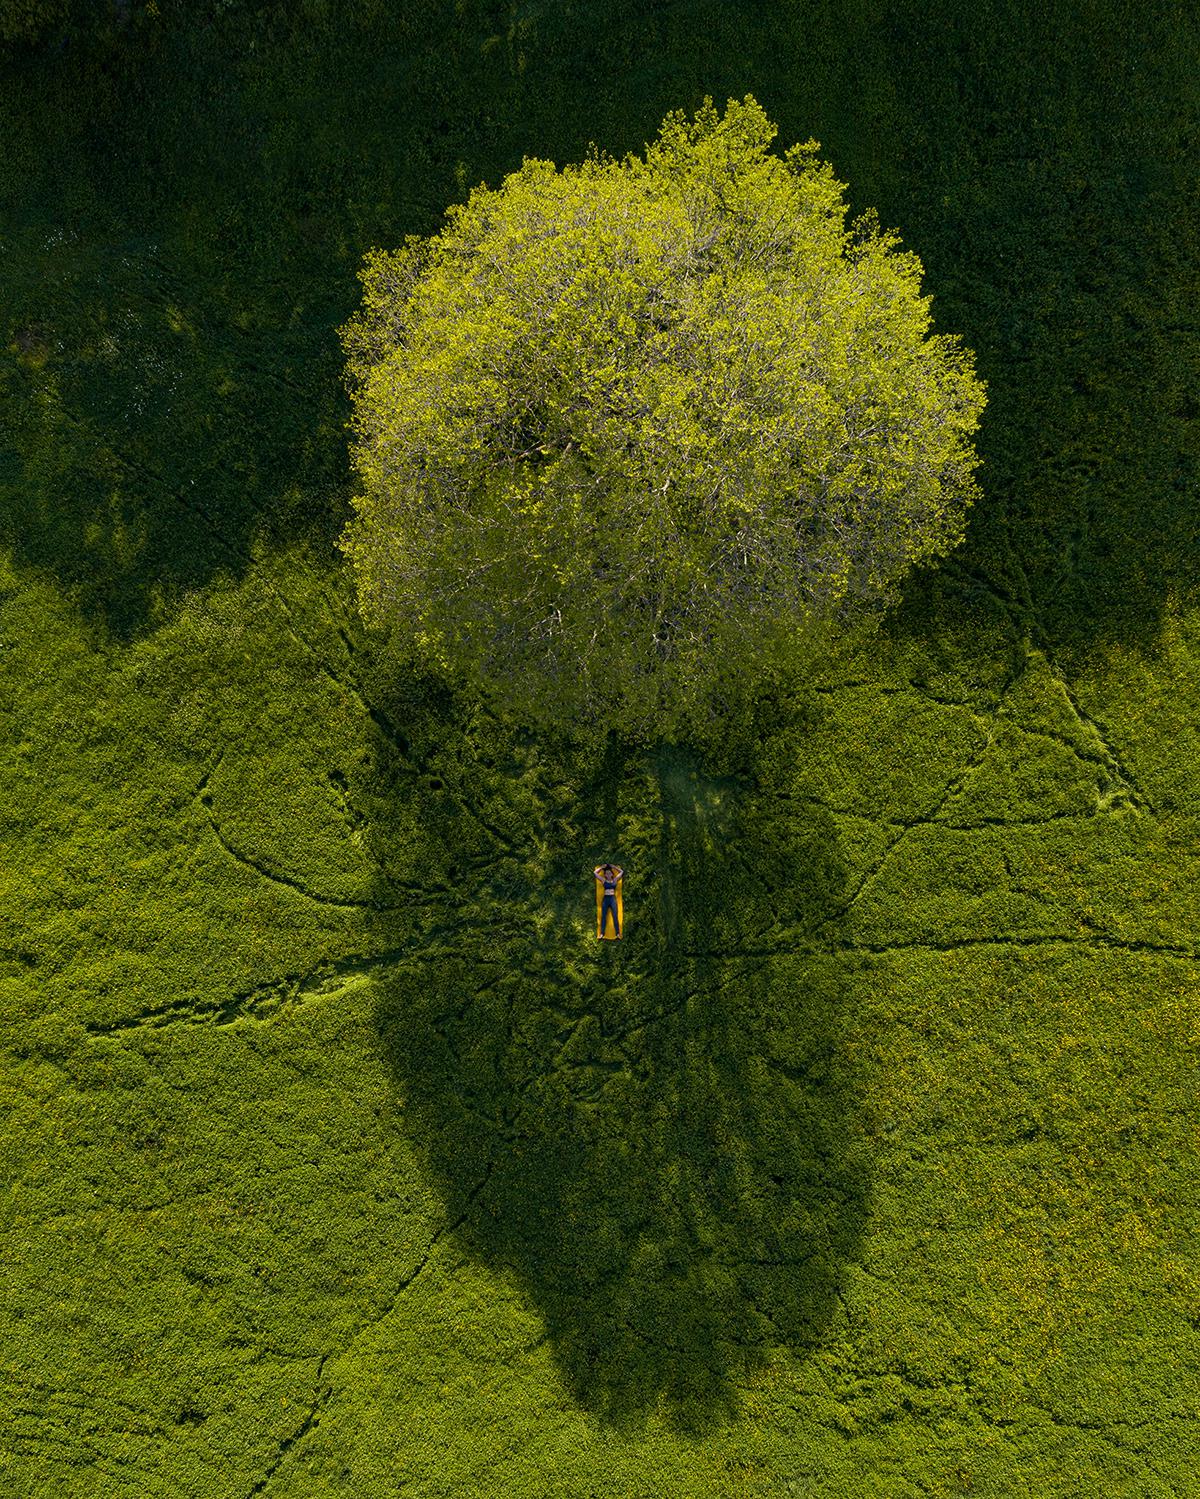 Drone Portraits Spectacular Aerial Photography Series By Dimitar Karanikolov 17